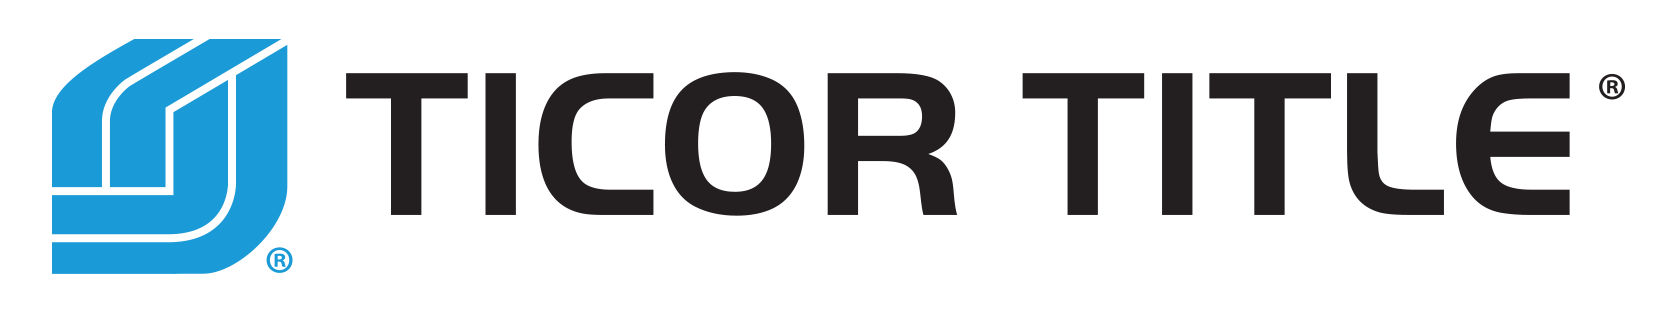 Ticor Title Company logo